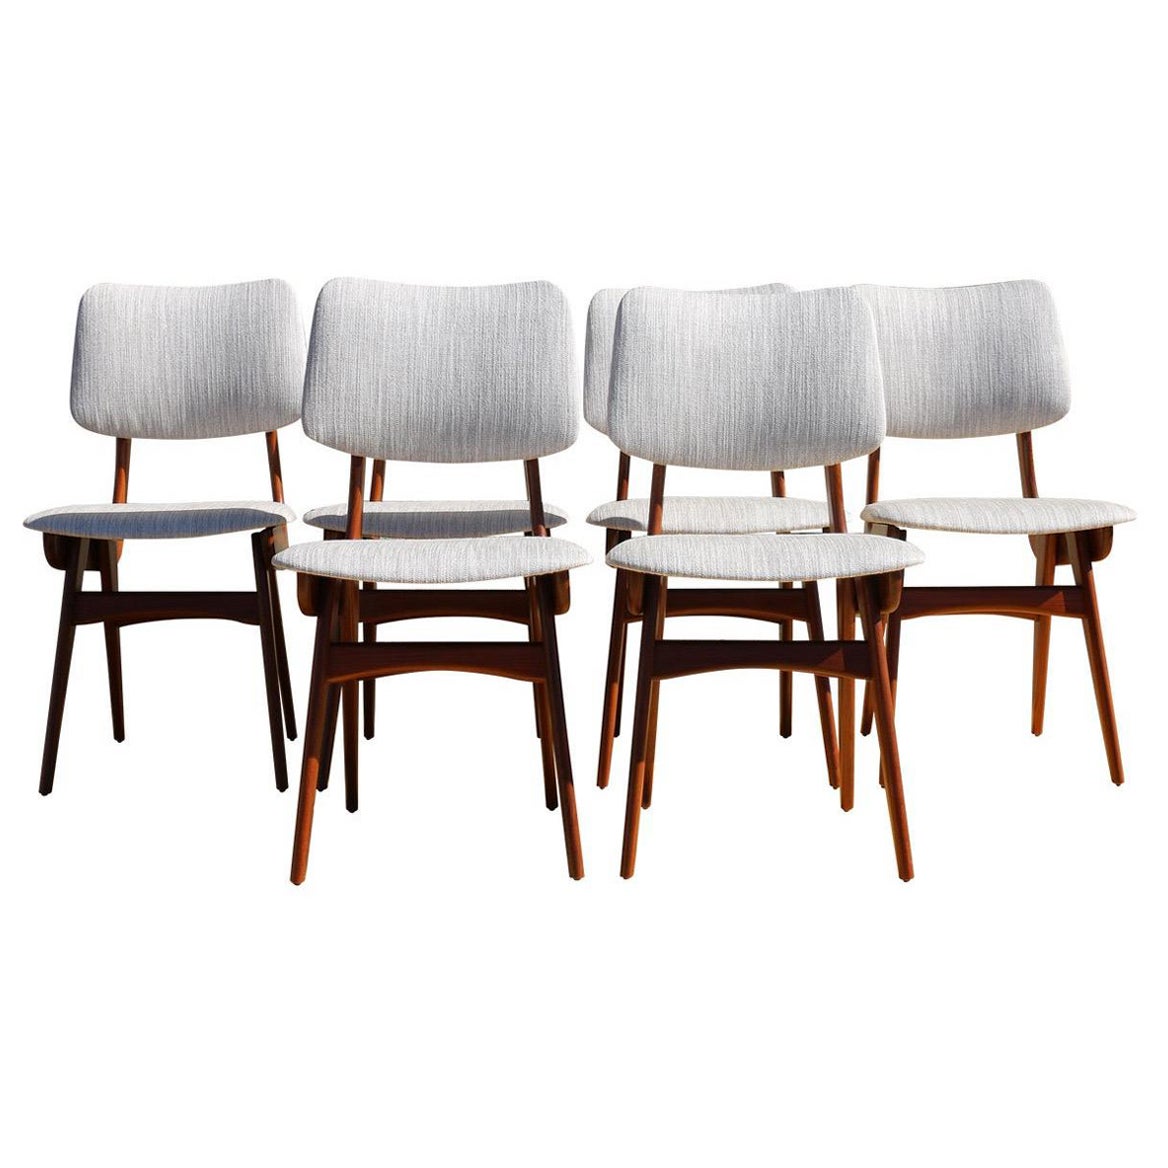 Louis Van Teeffelen Dining Room Chairs